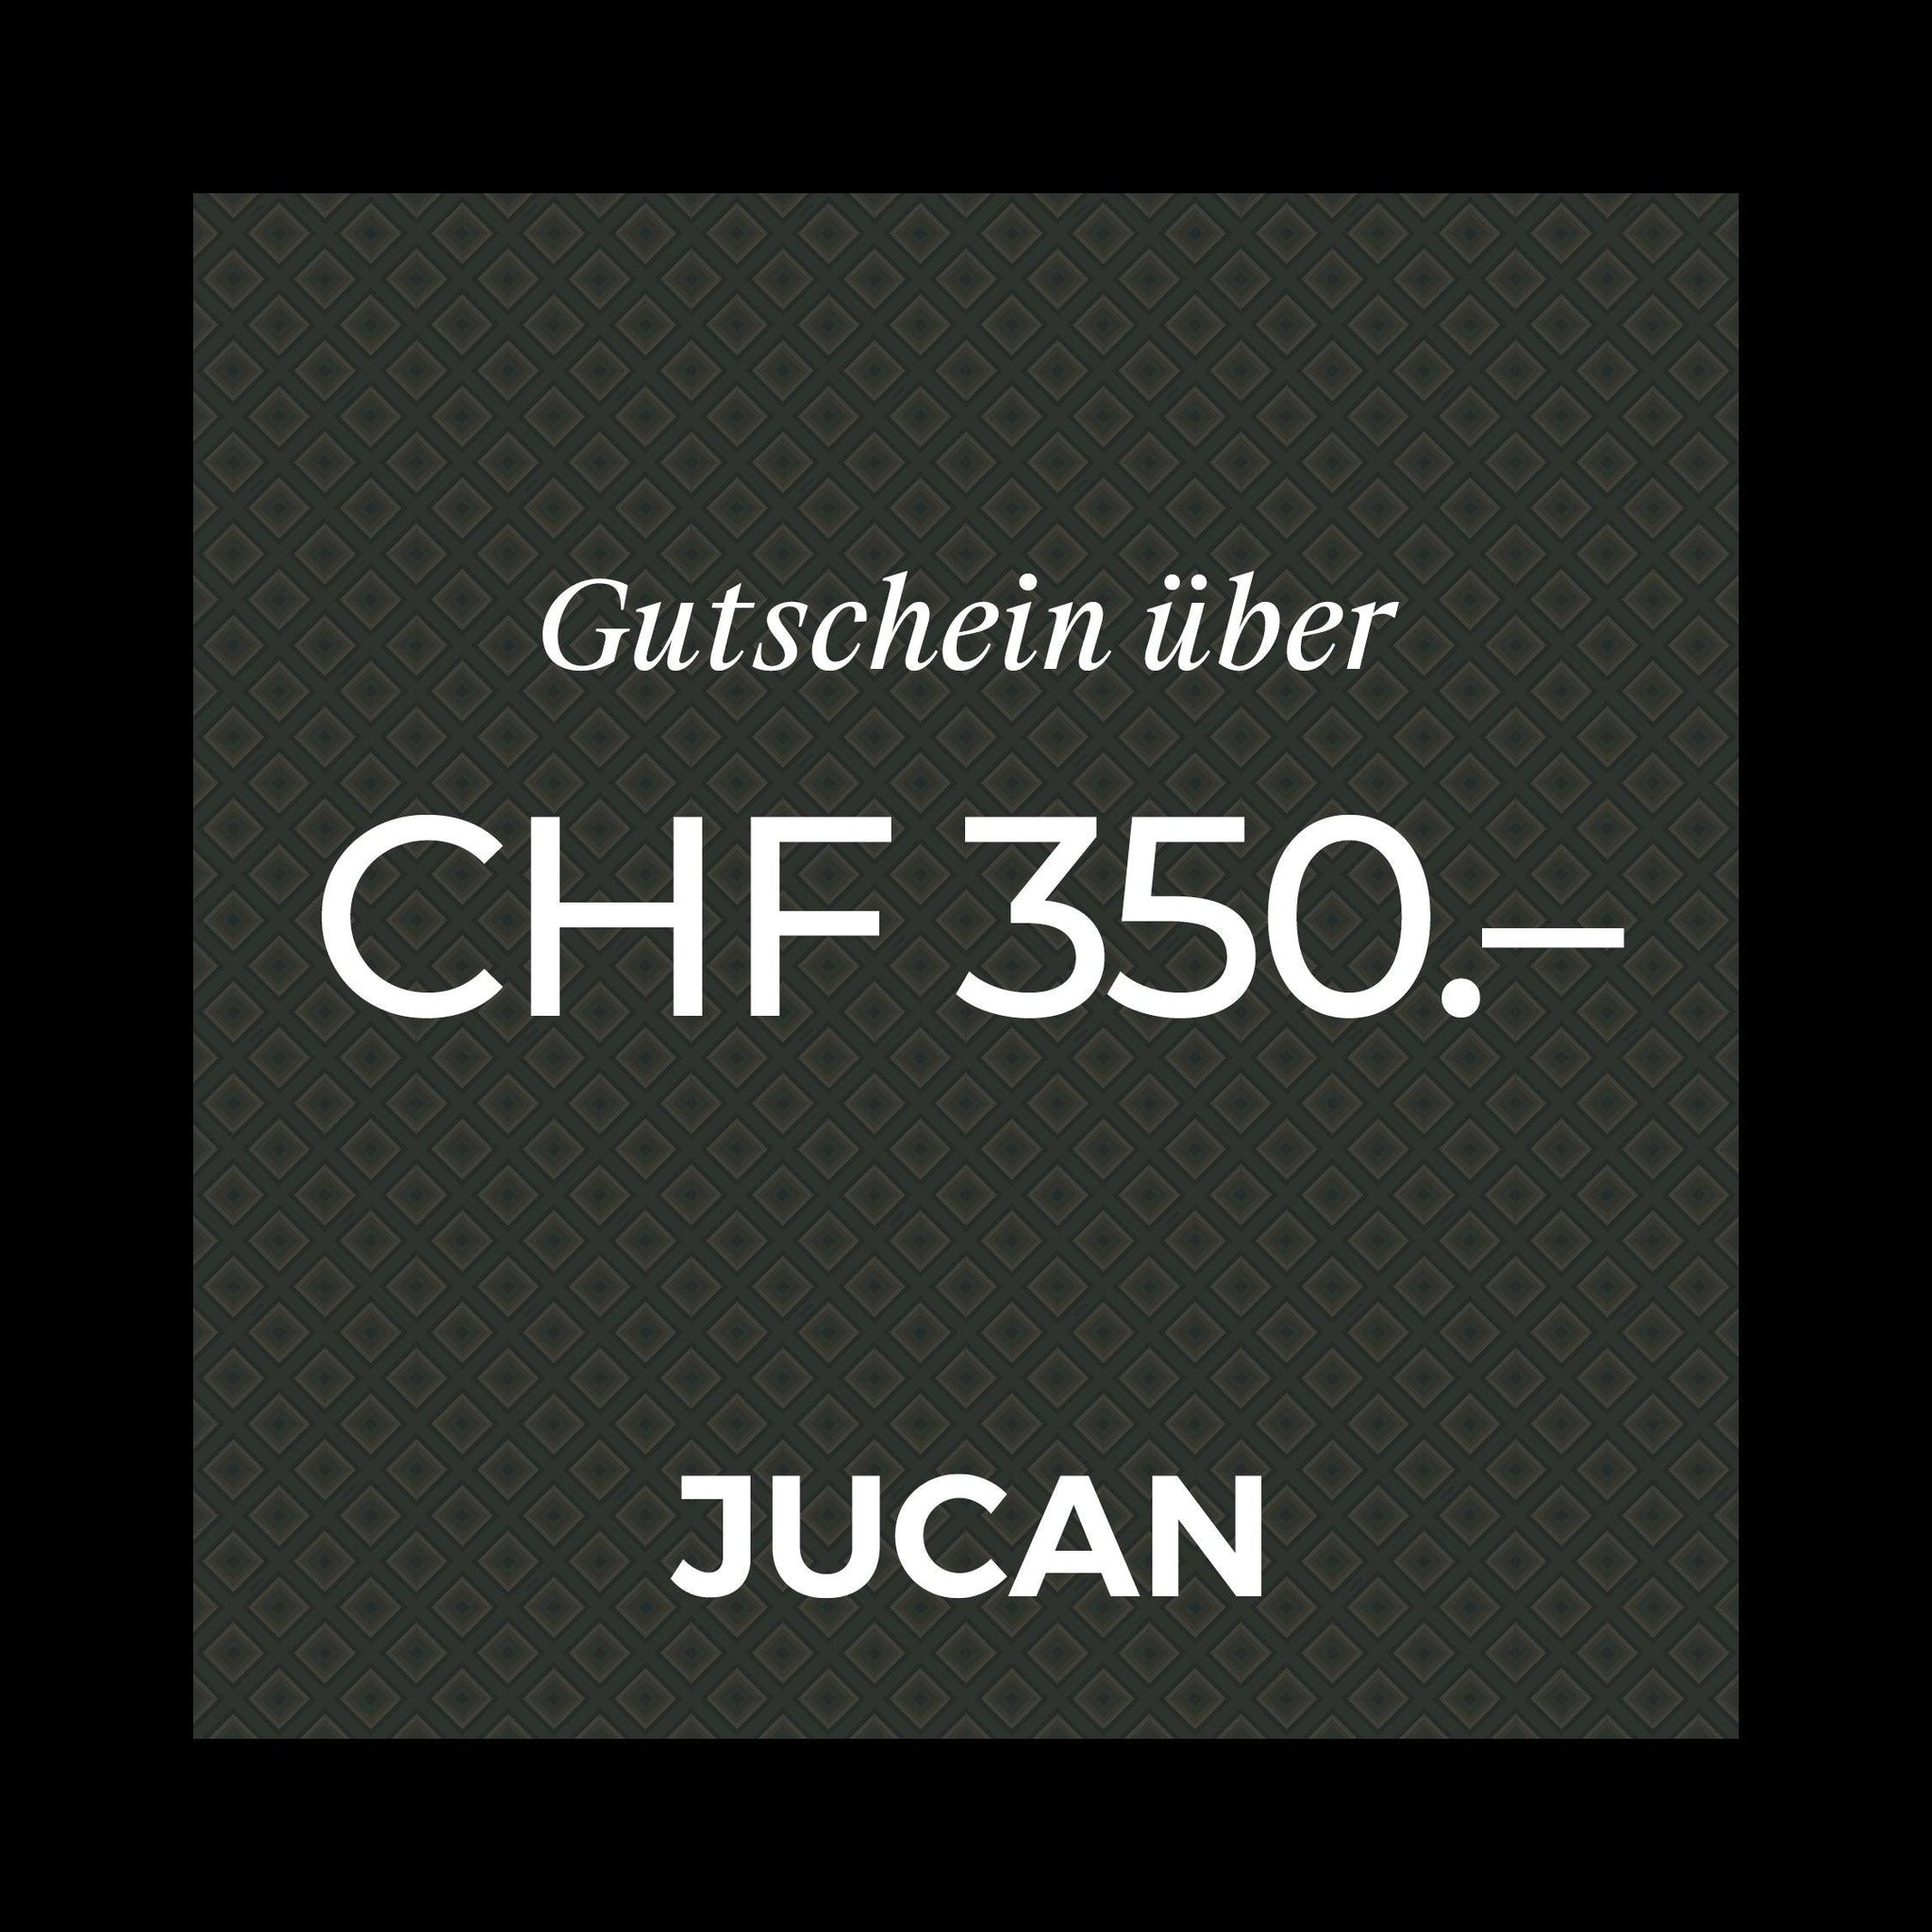 JUCAN Gutschein - JUCAN GmbH